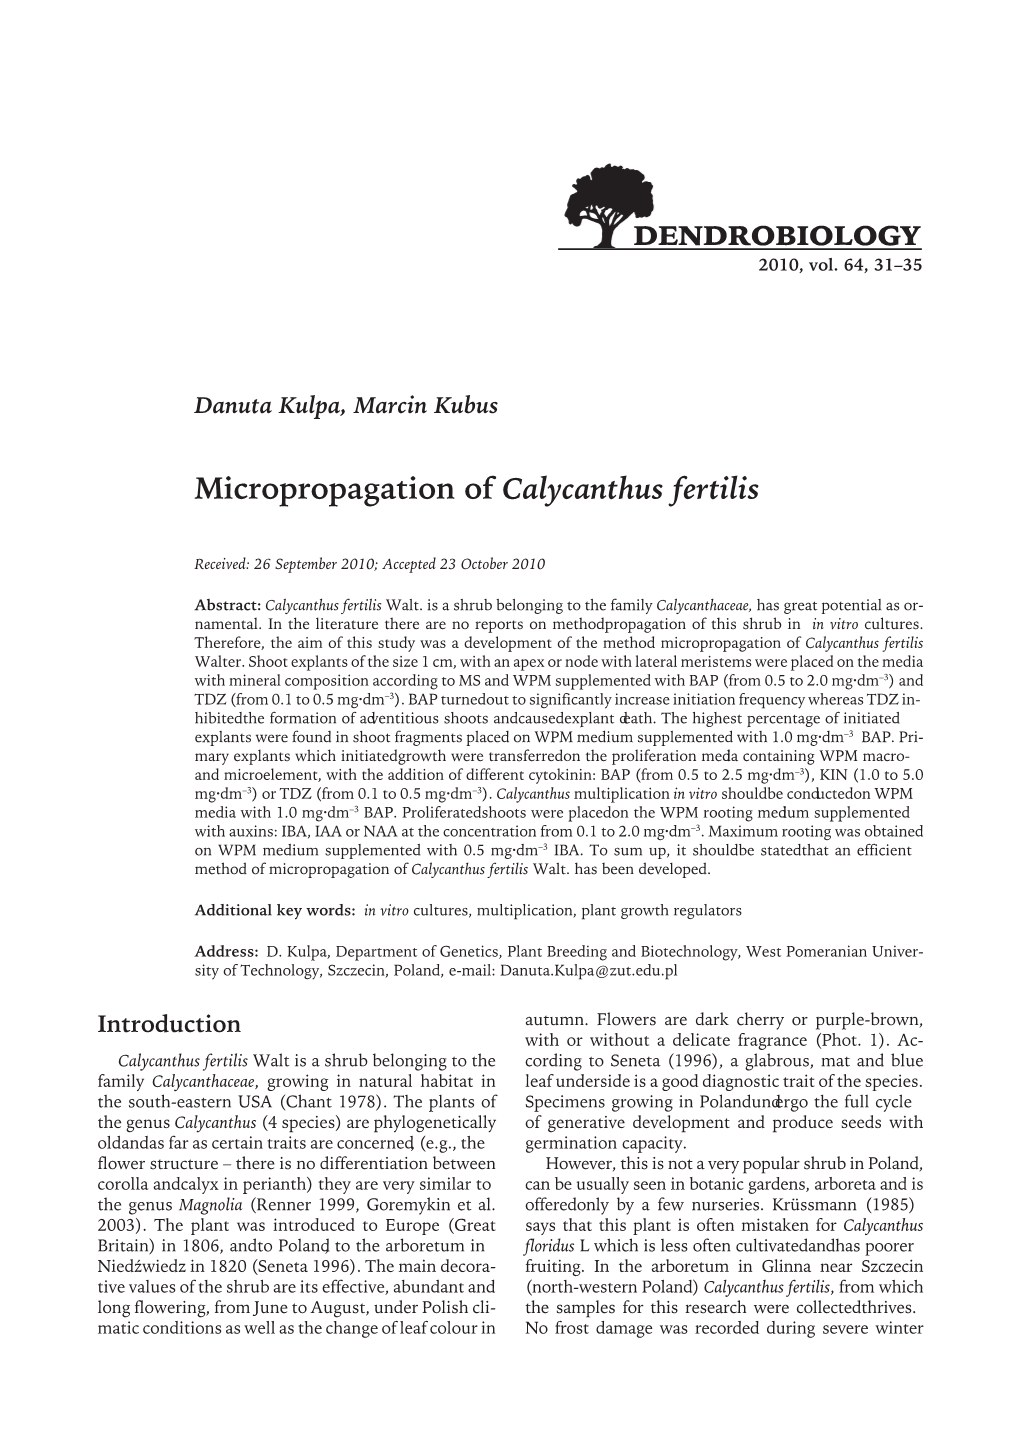 Micropropagation of Calycanthus Fertilis